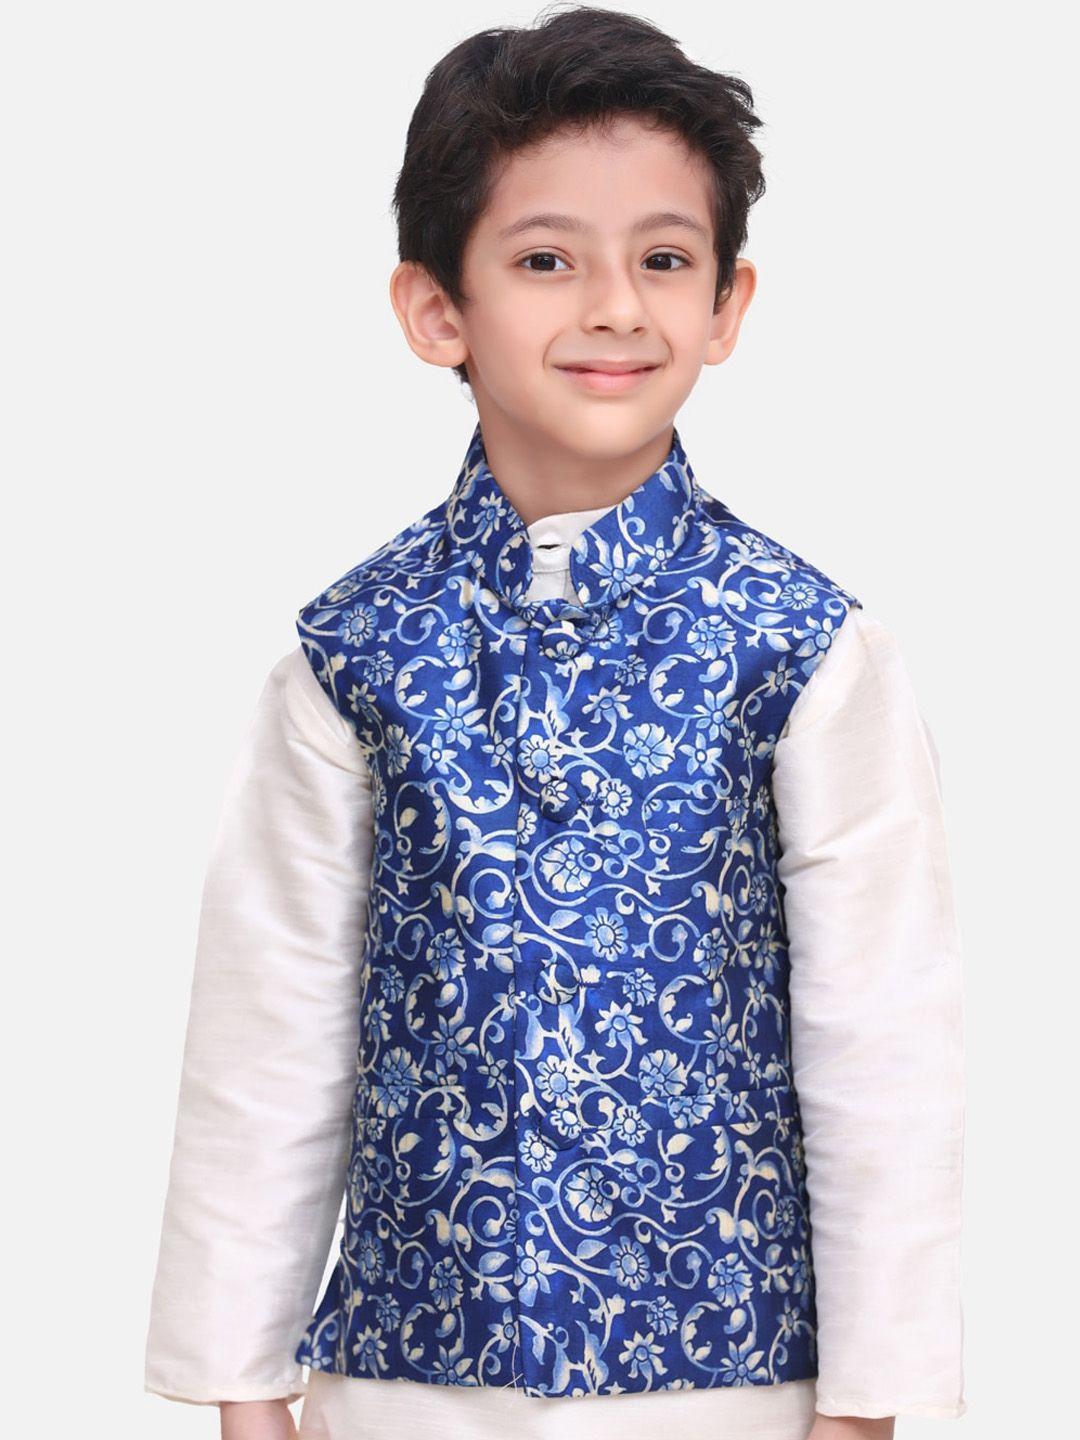 lilpicks boys navy blue & white floral digital printed nehru jacket